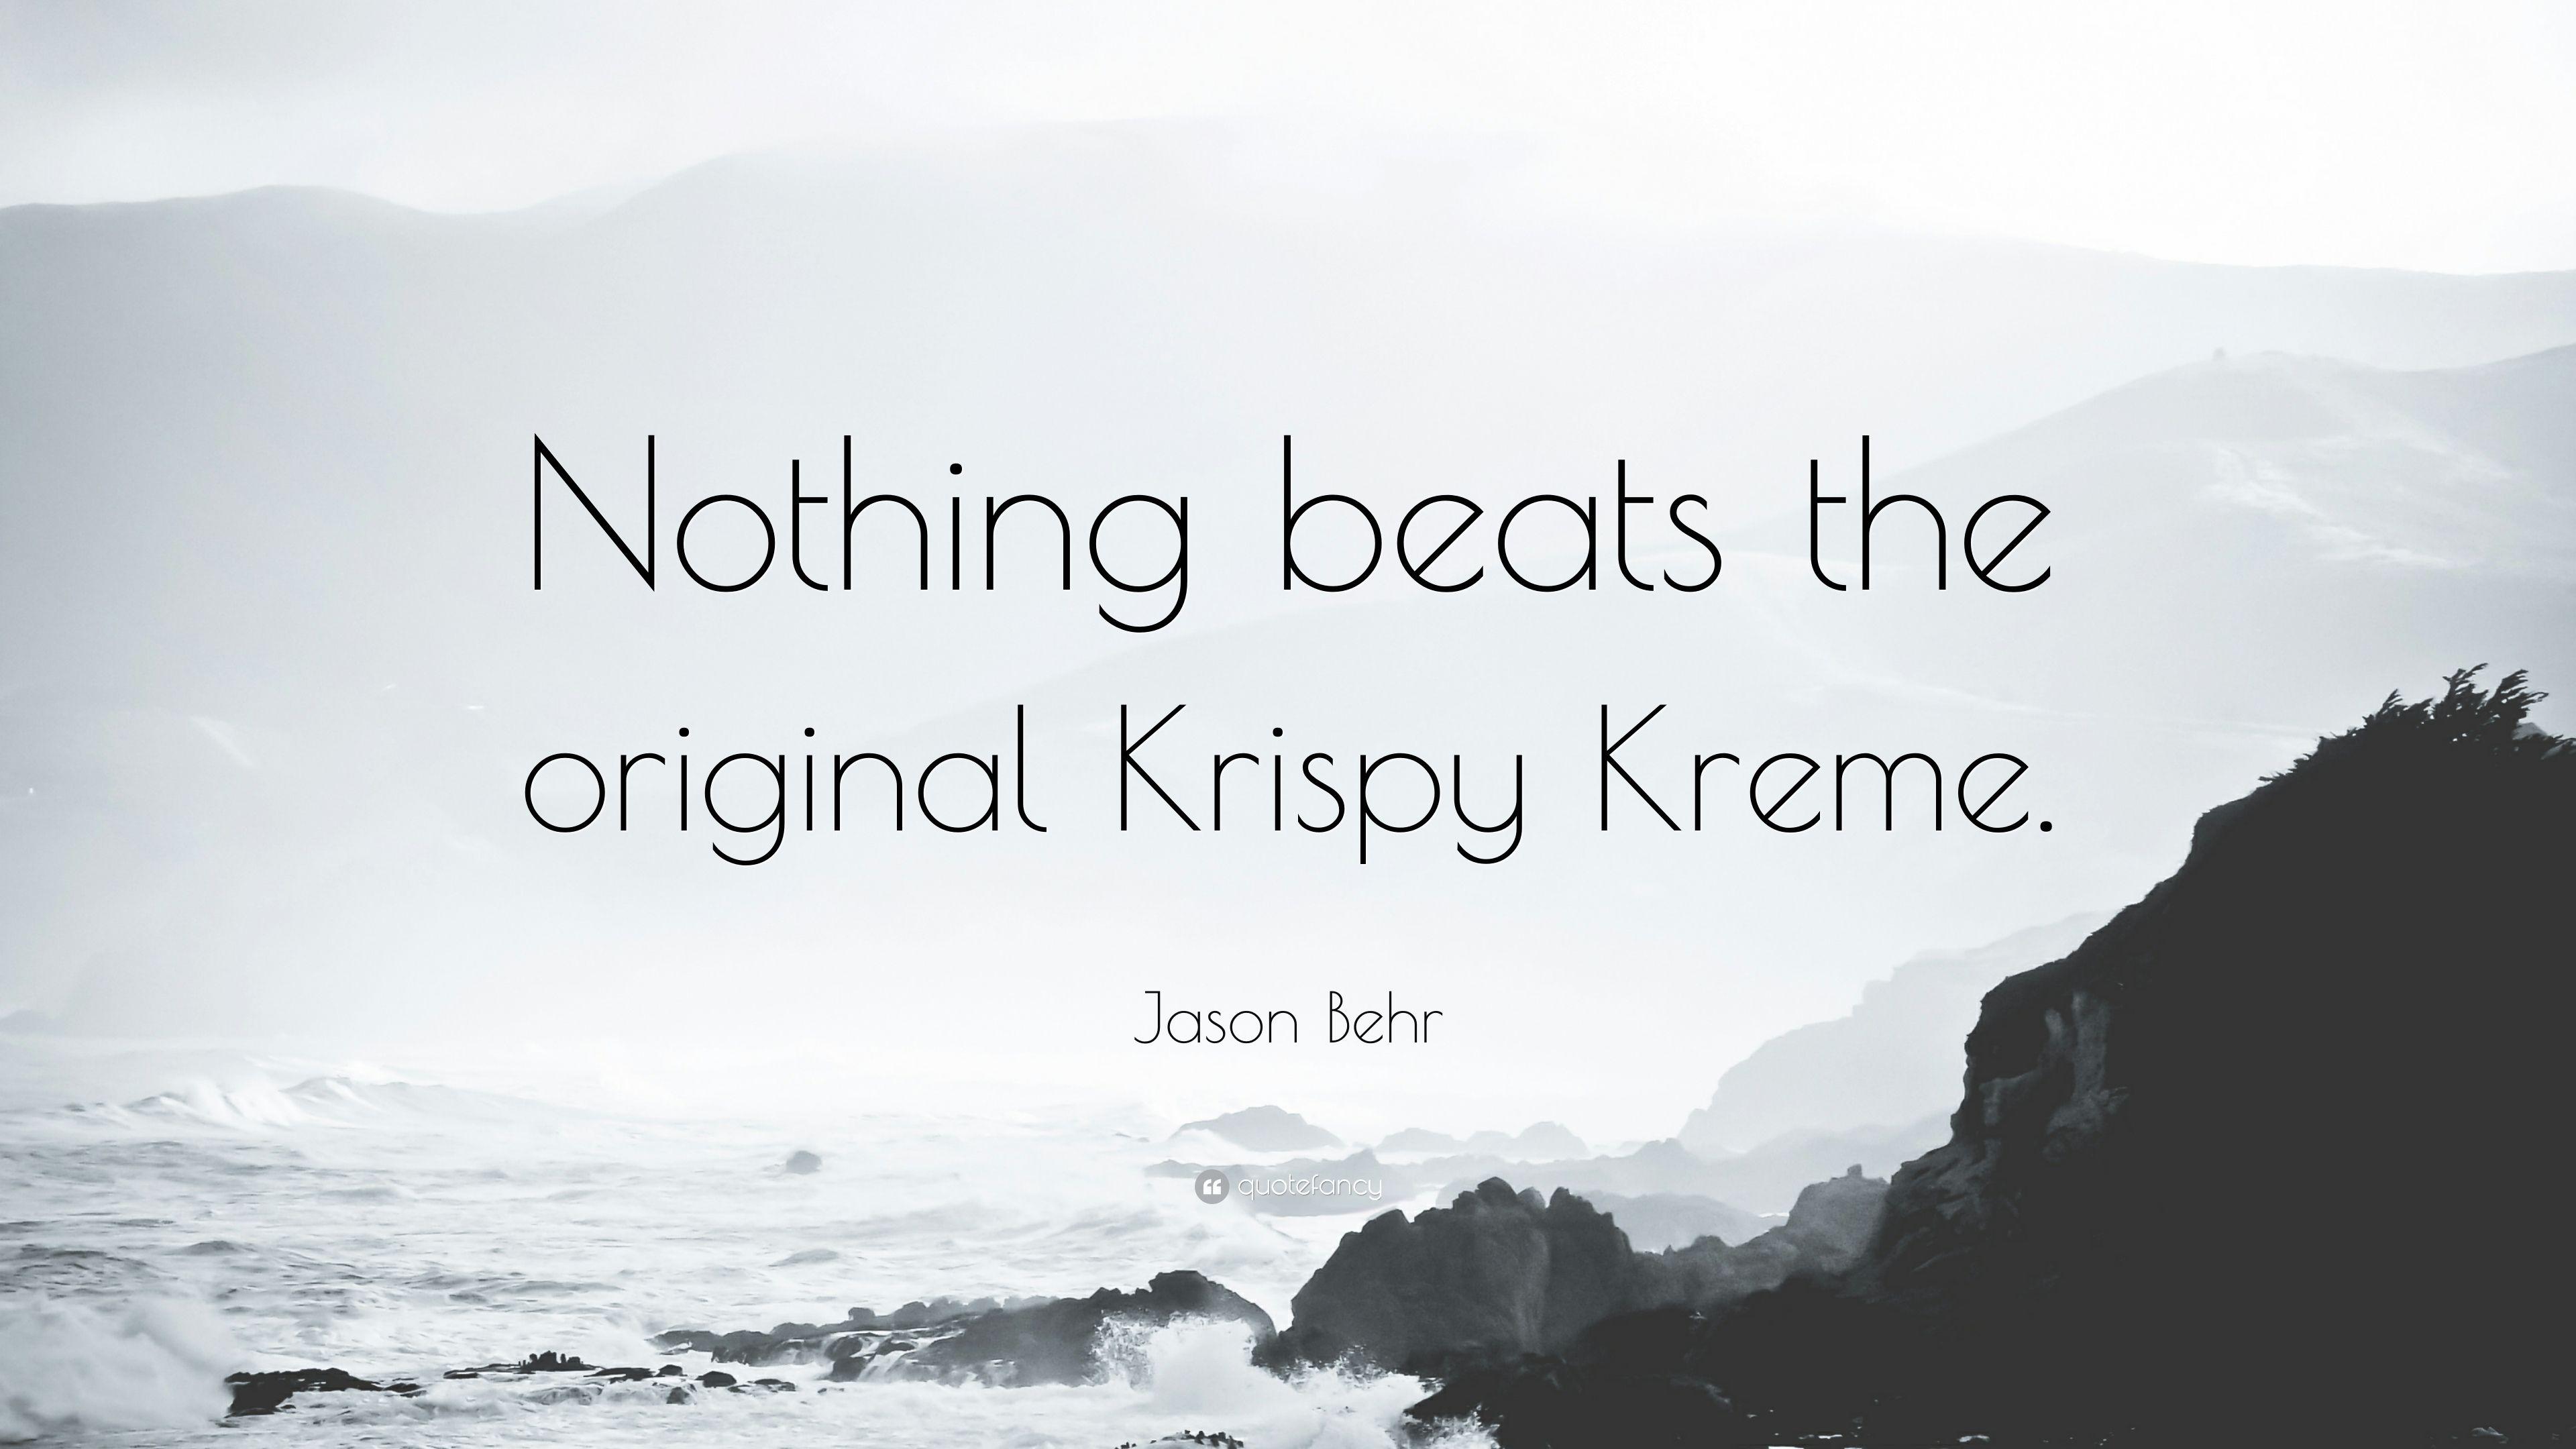 Jason Behr Quote: “Nothing beats the original Krispy Kreme.” 7